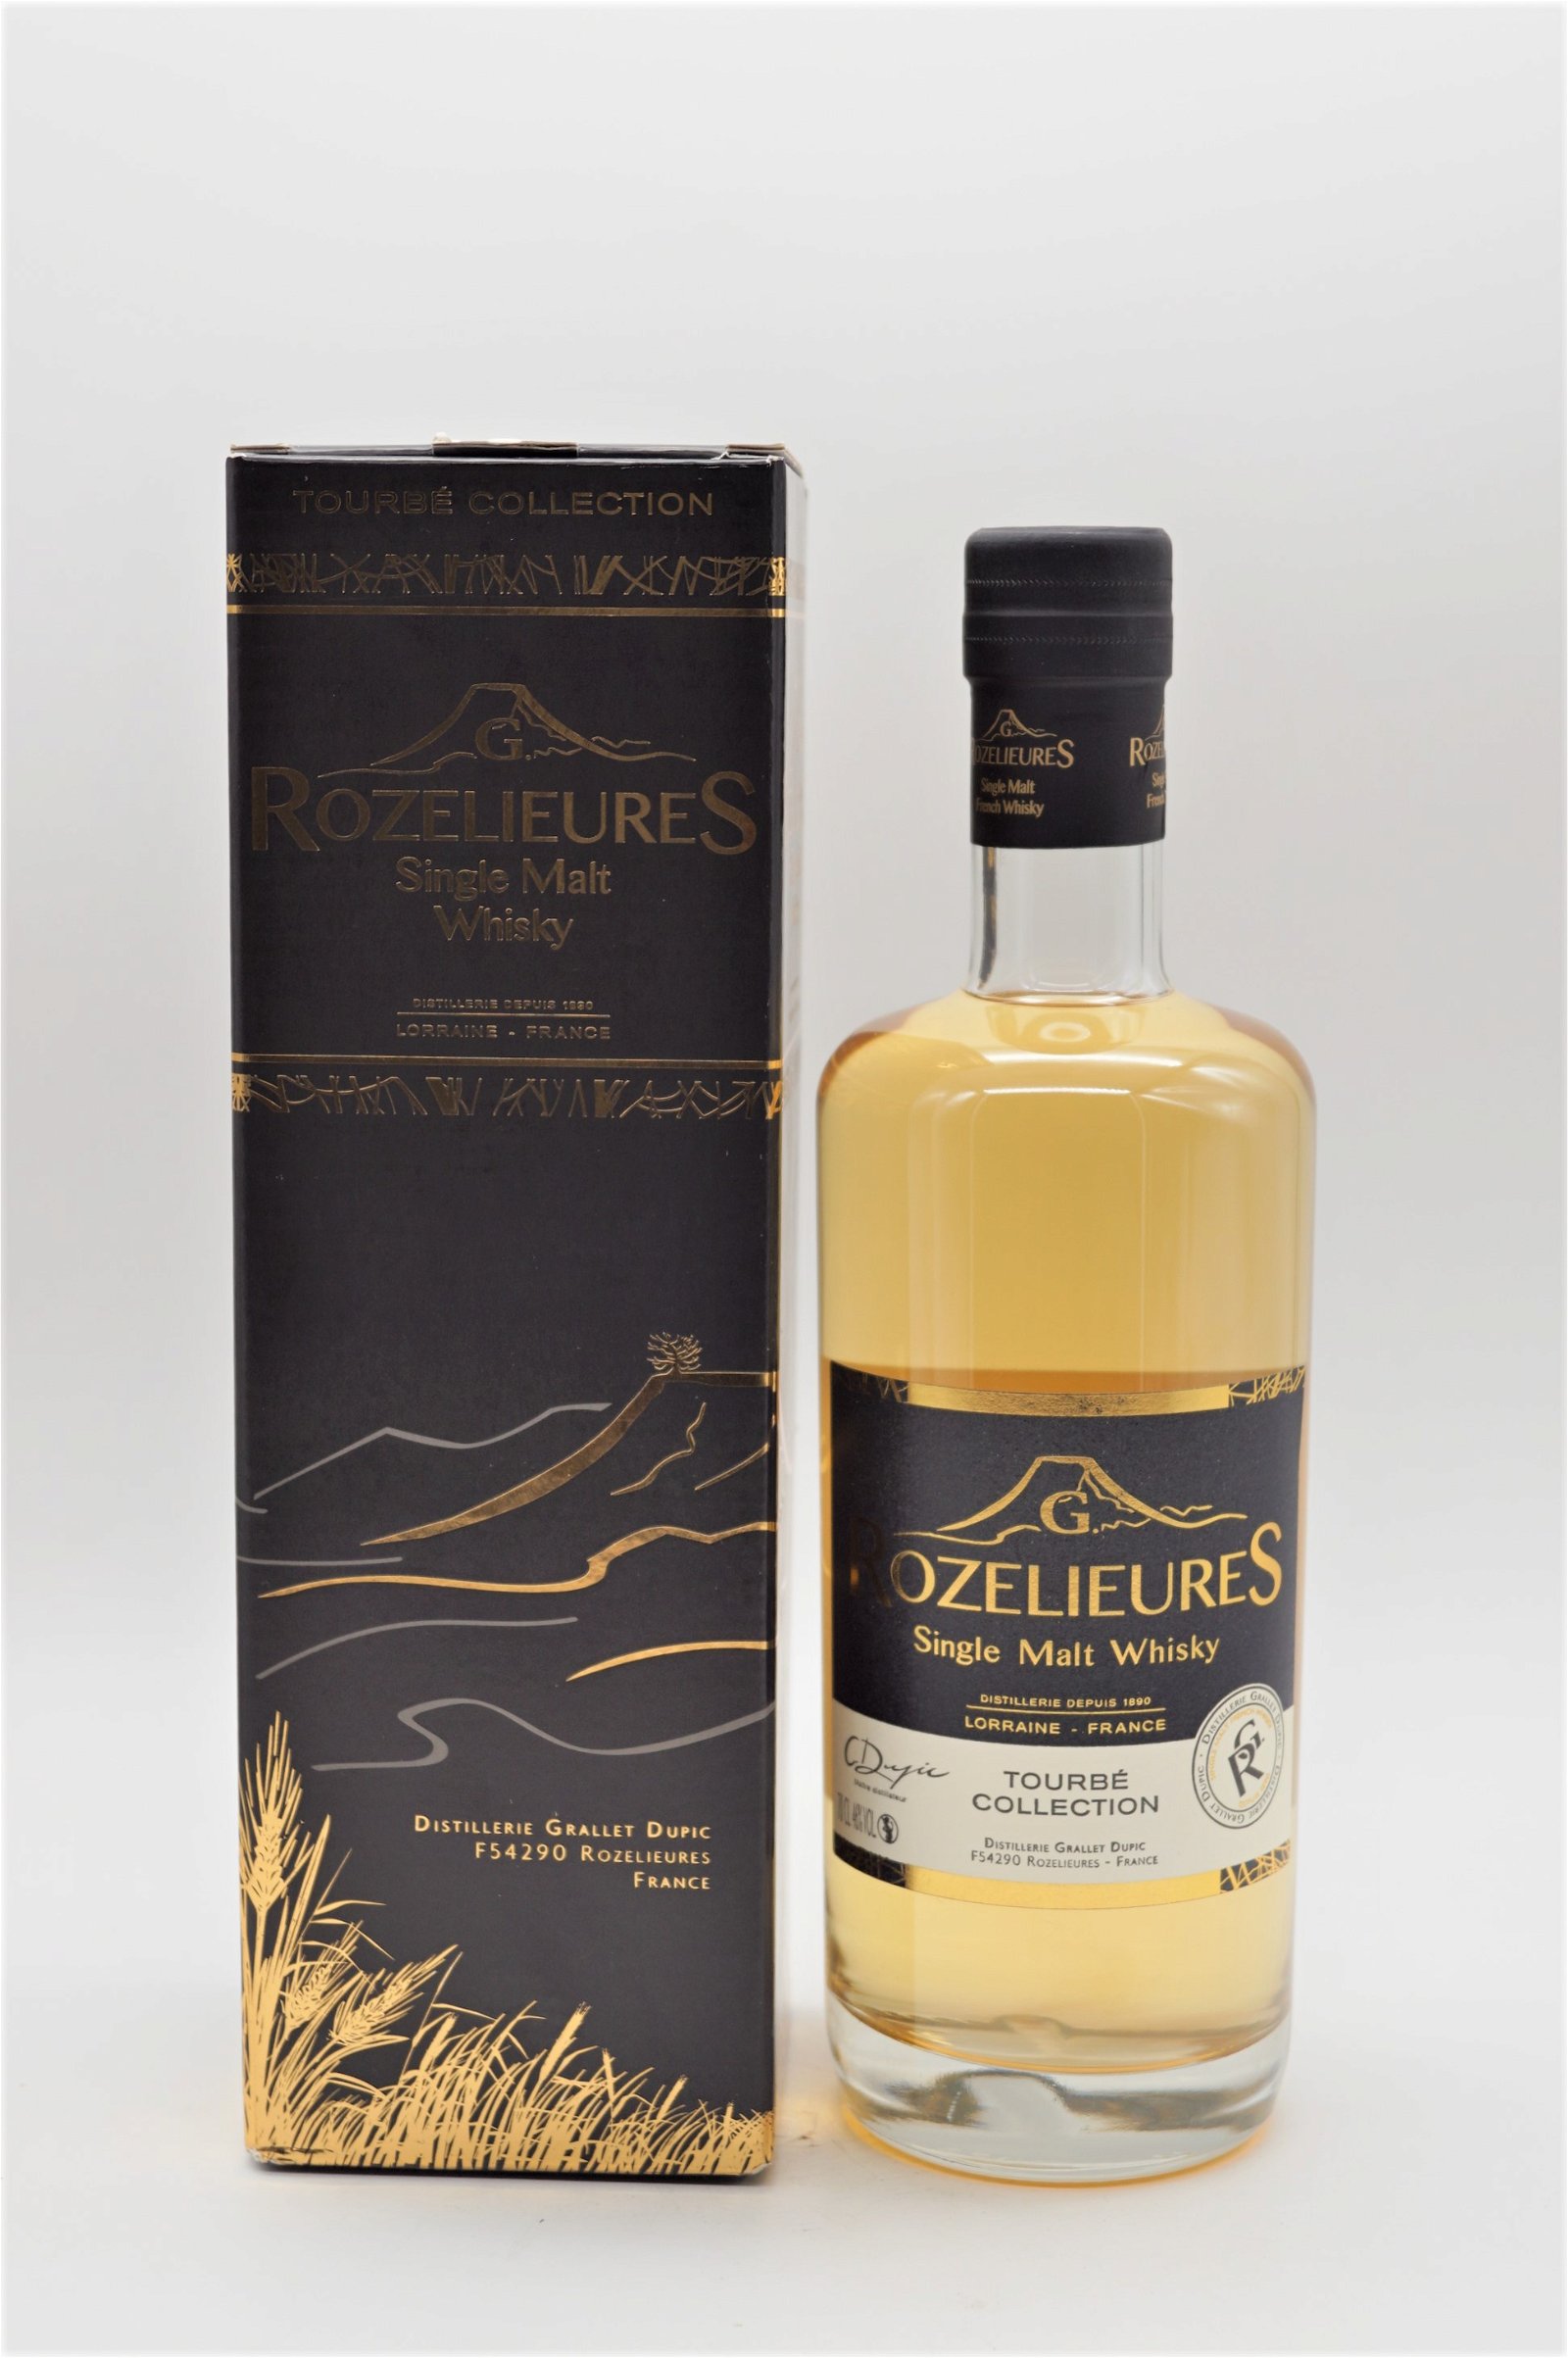 G. Rozelieures Tourbe Collection Single Malt Whisky 